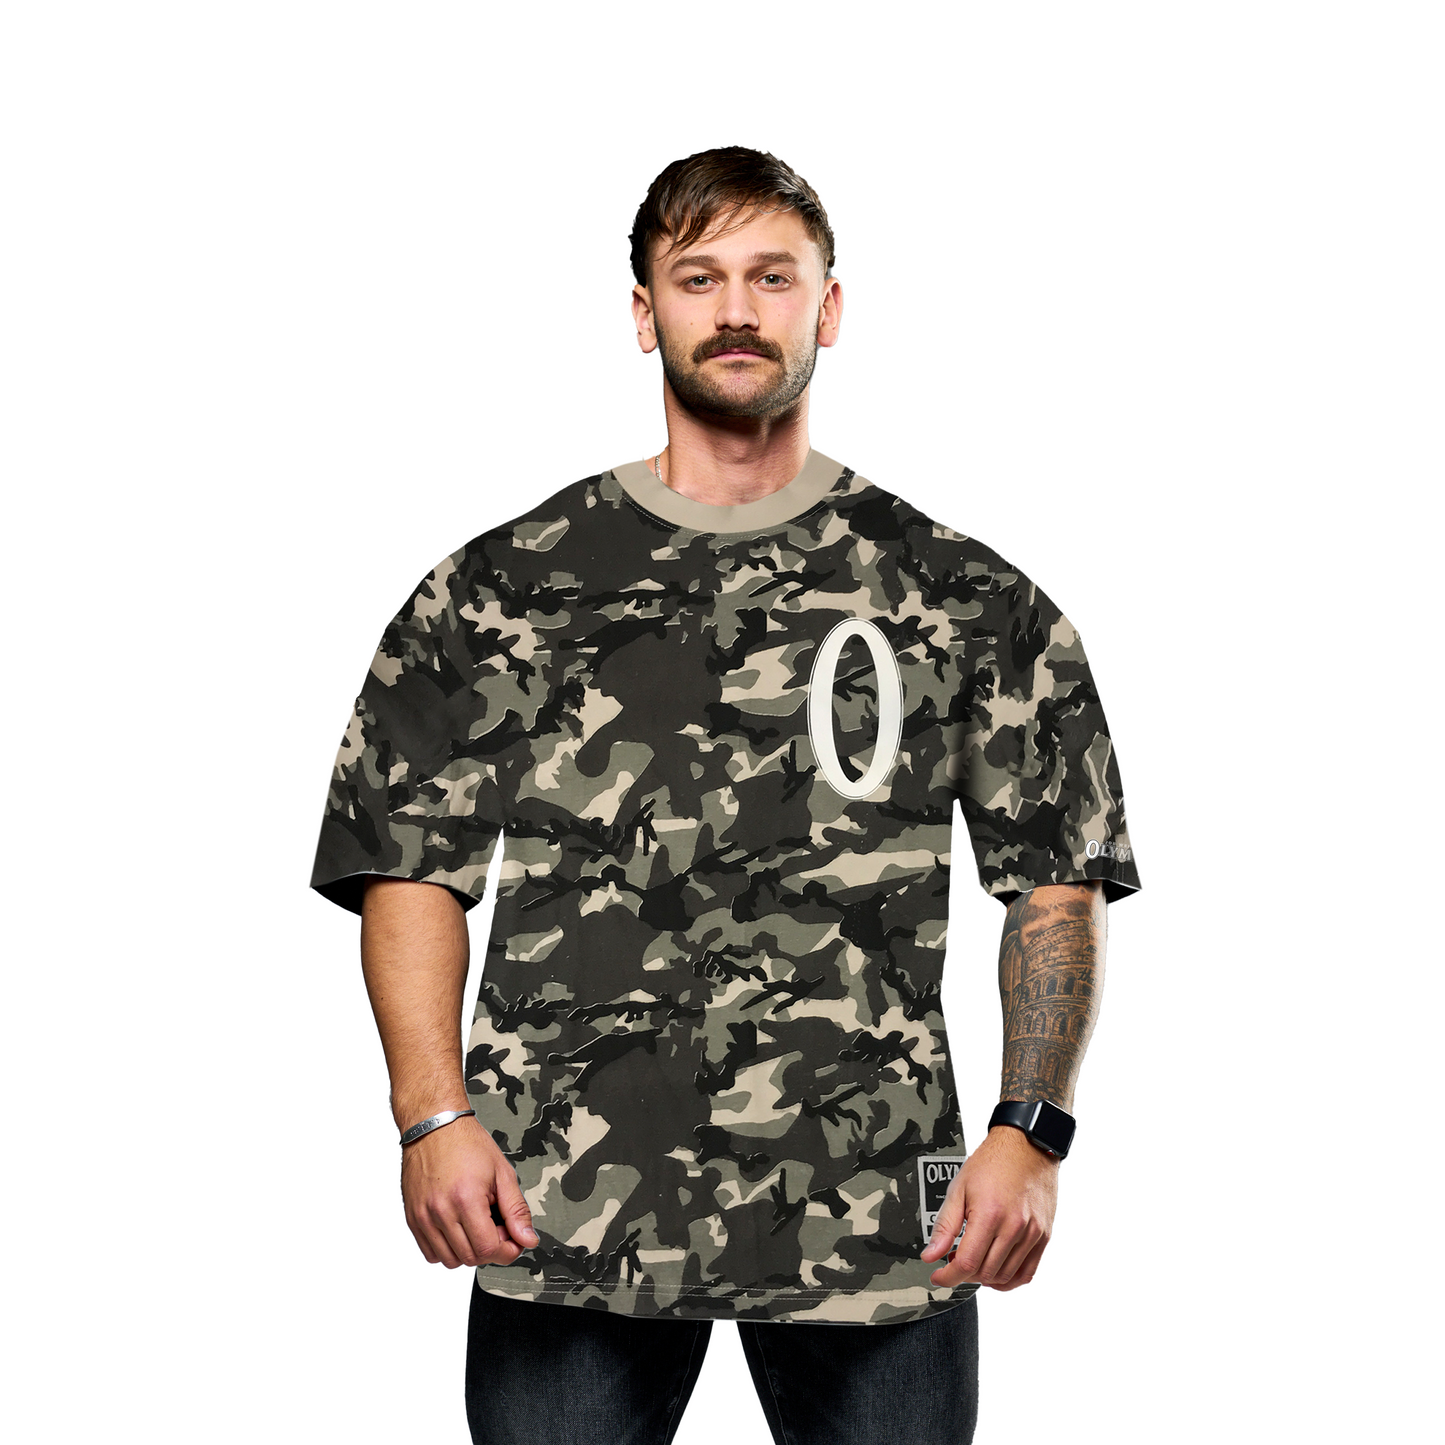 Olympia OS T-Shirt Camo